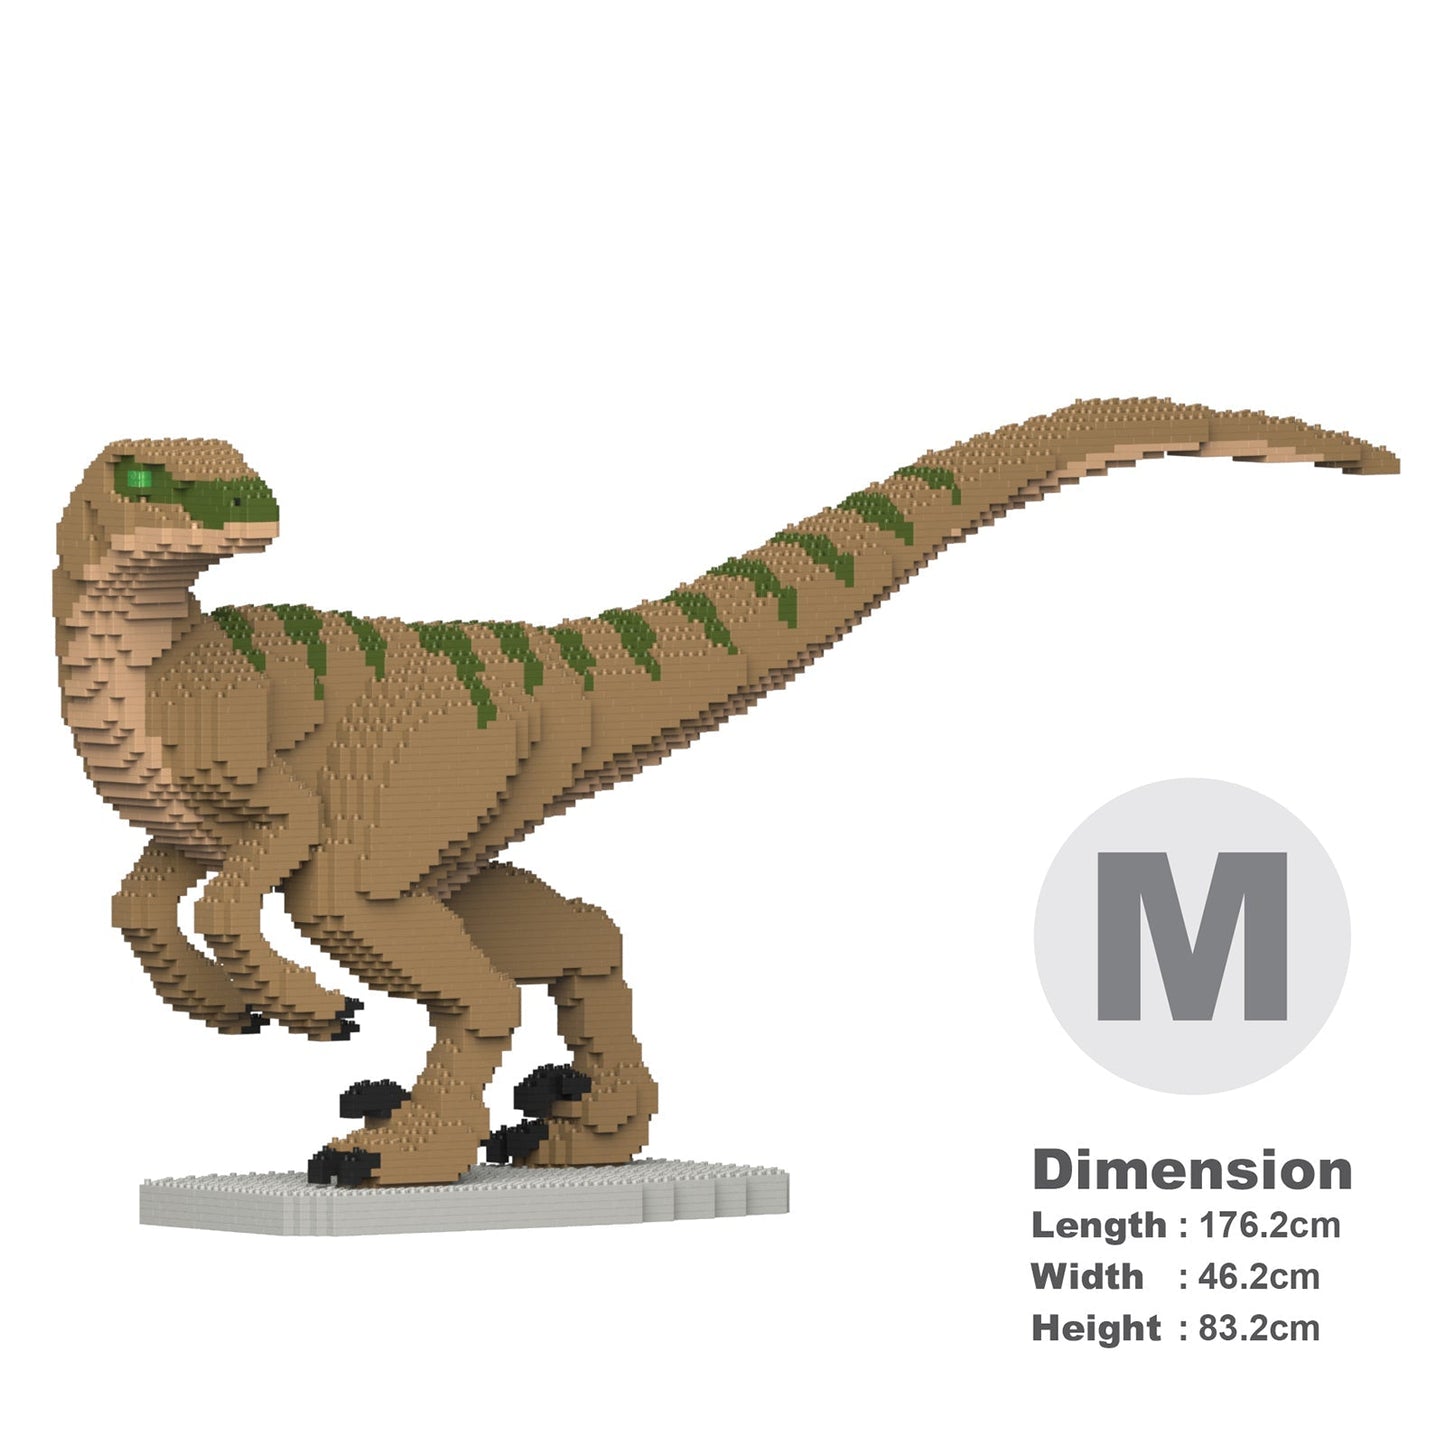 Velociraptor 01-M02